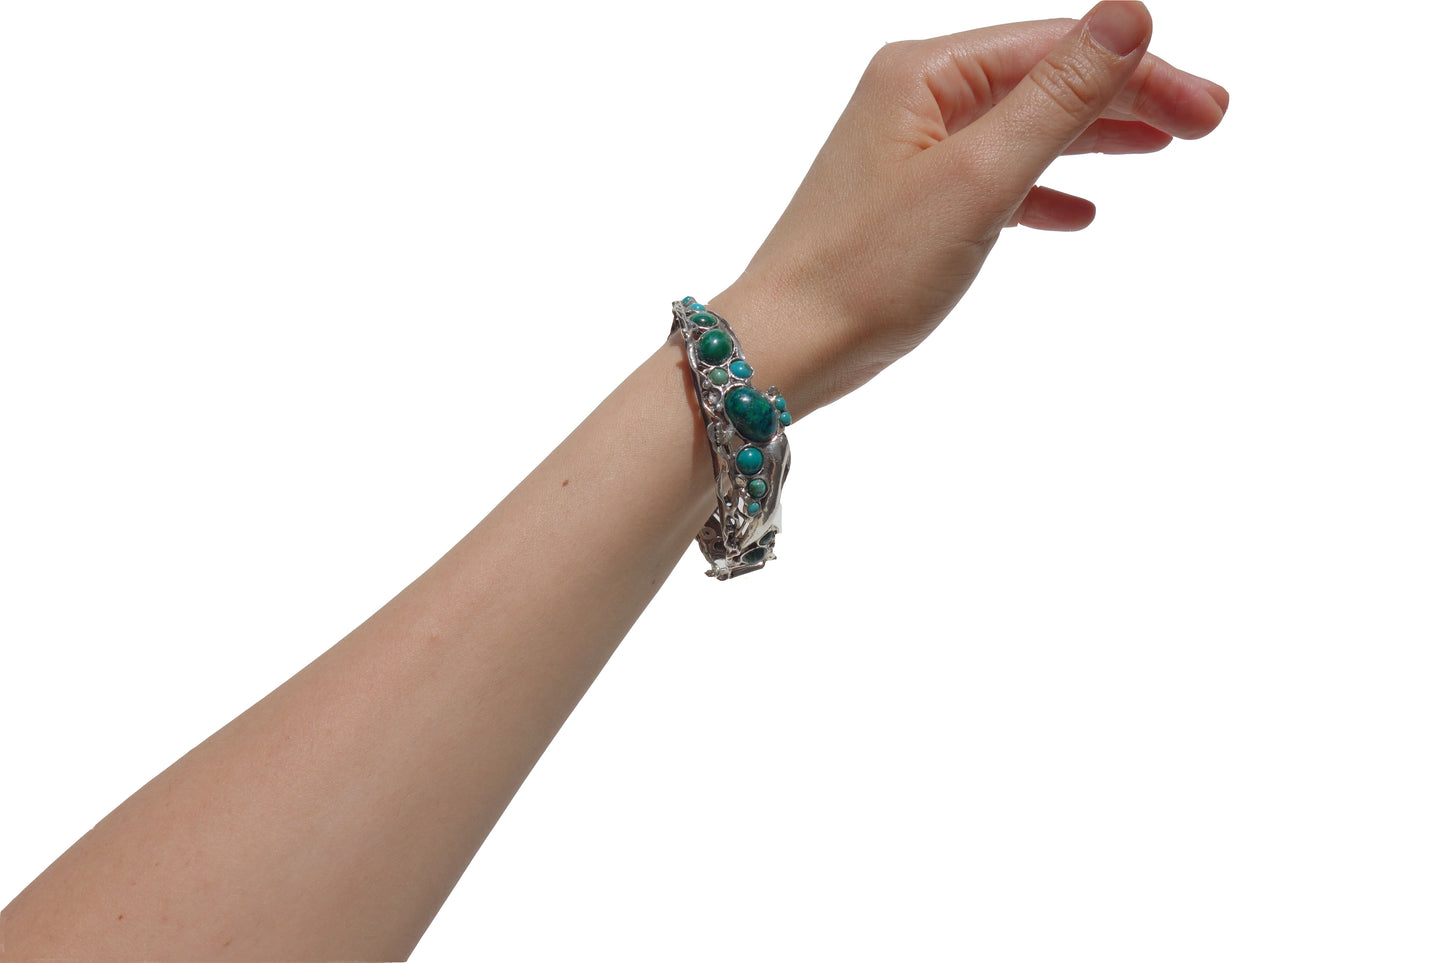 Gorgeous solid sterling silver and natural Eilat gemstones bracelet.